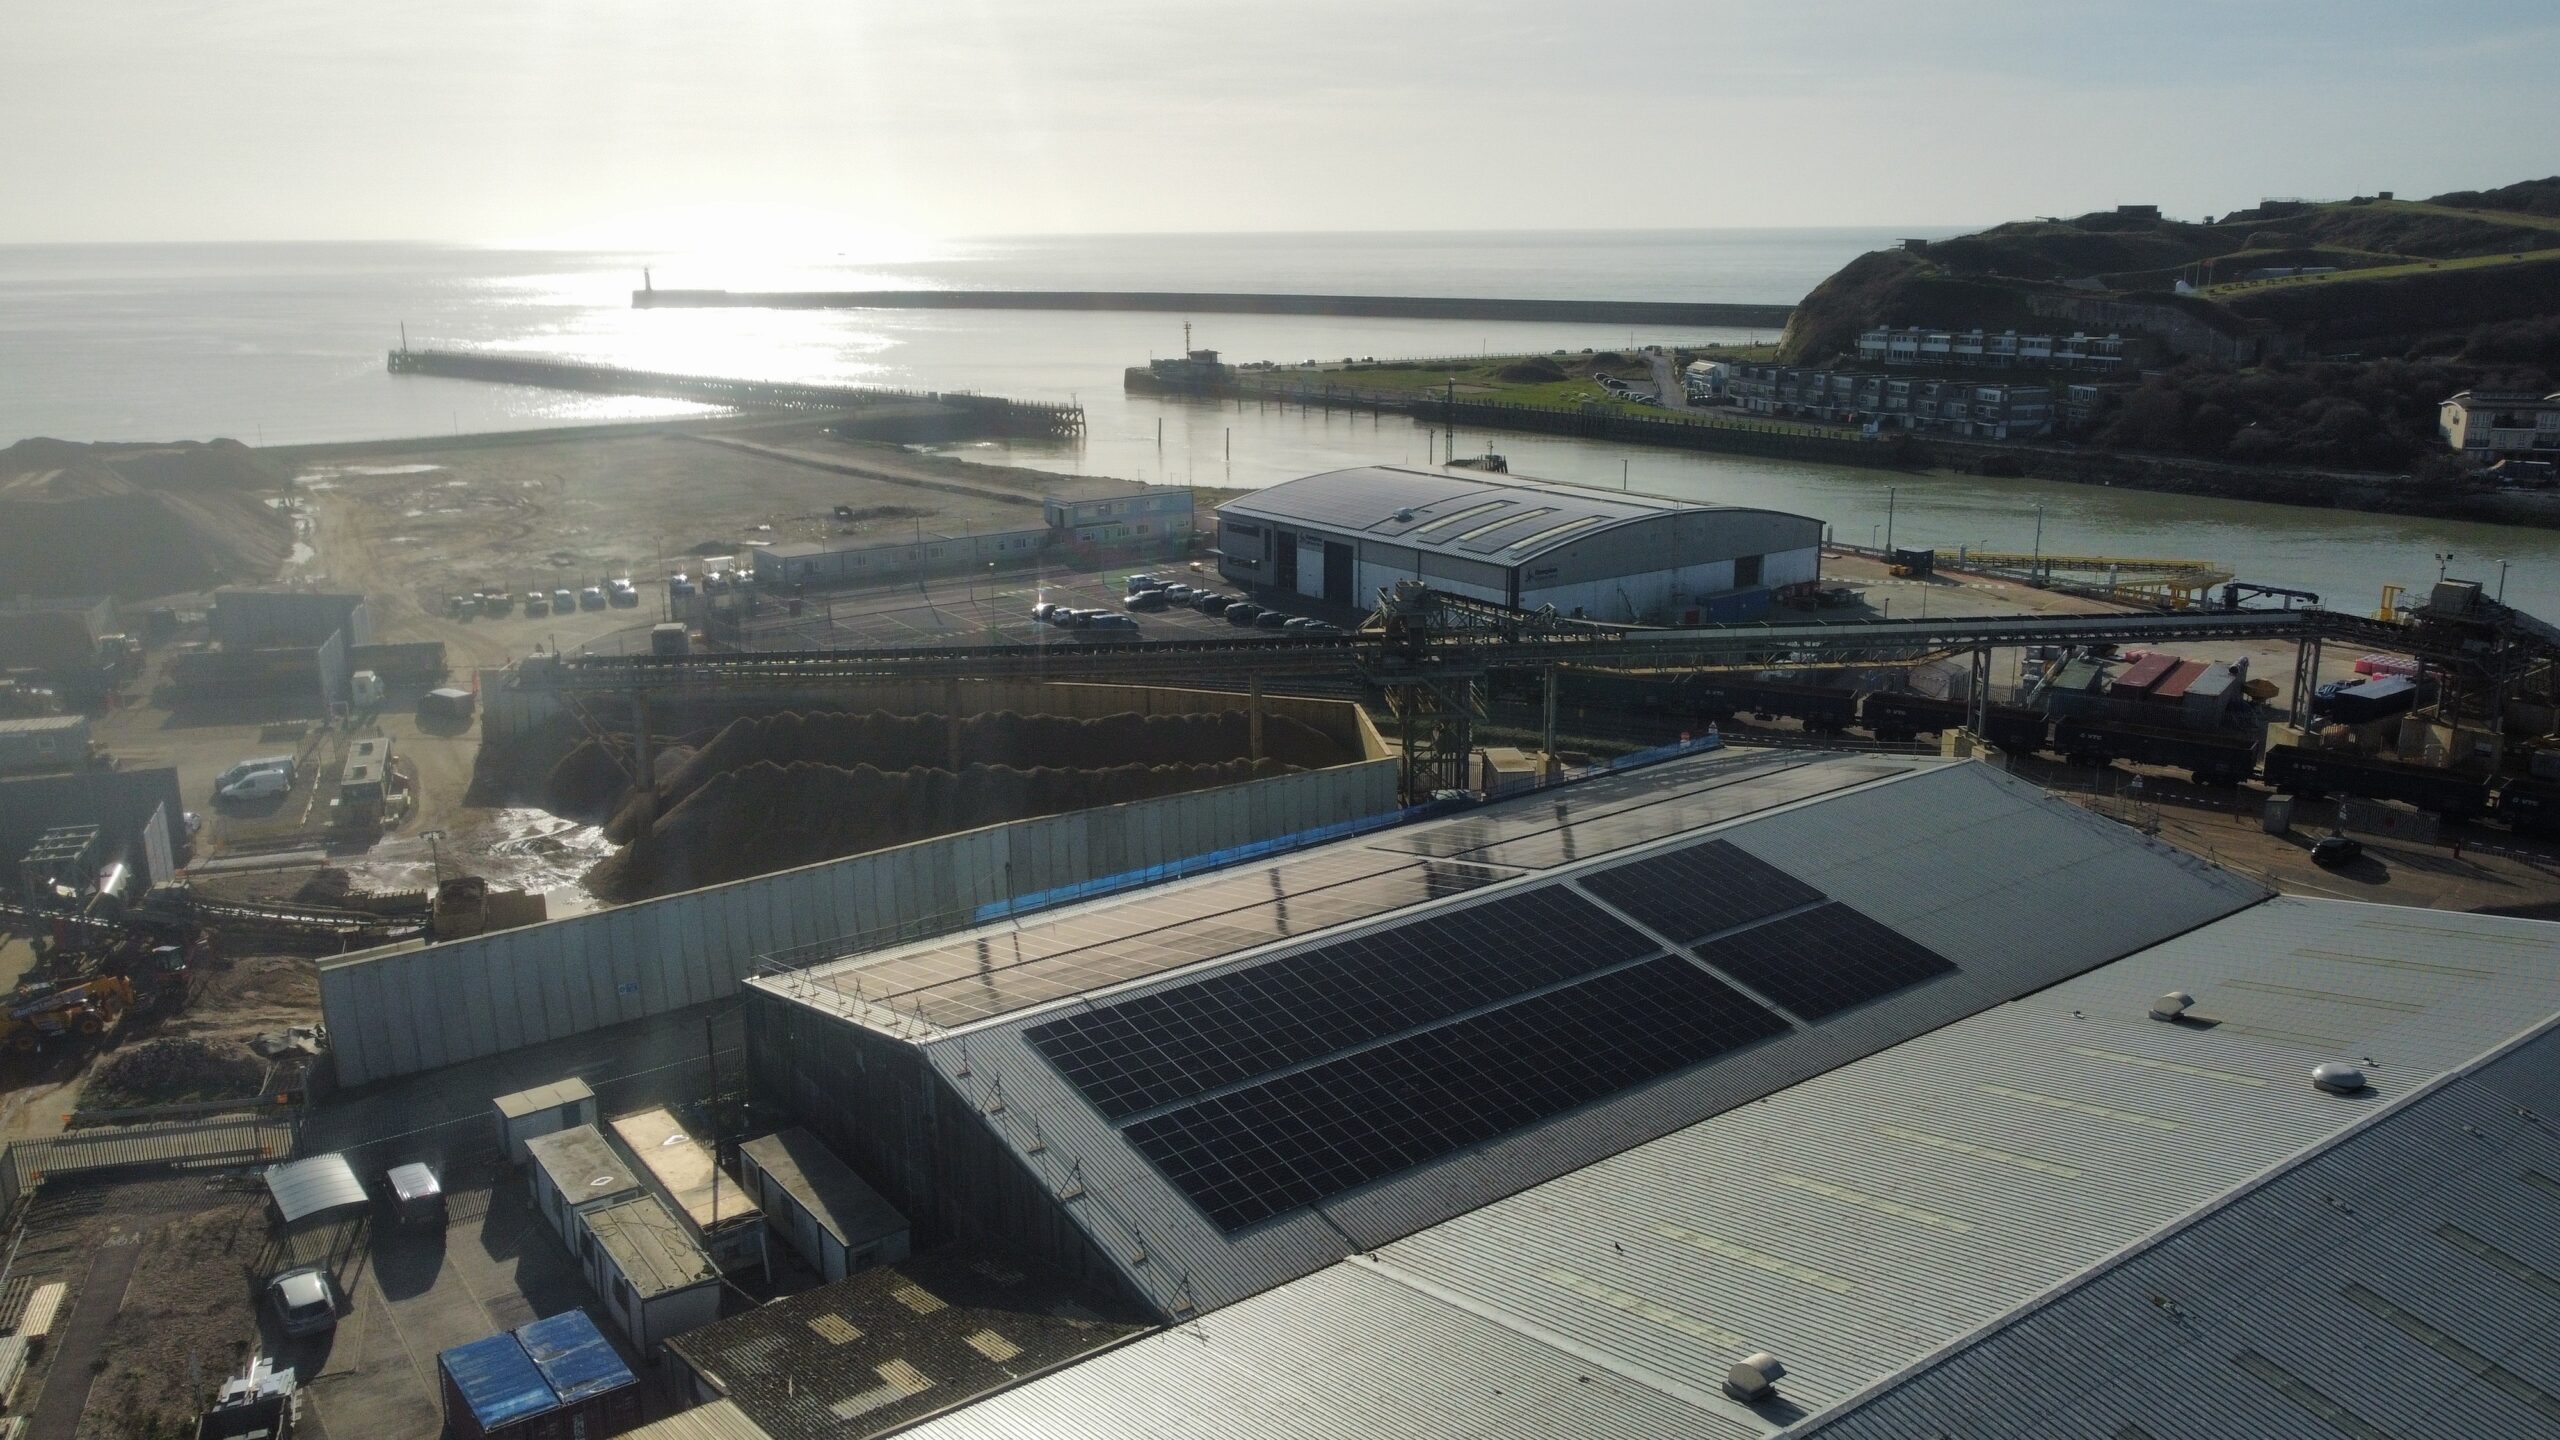 Community energy solar panels on Newhaven Port building